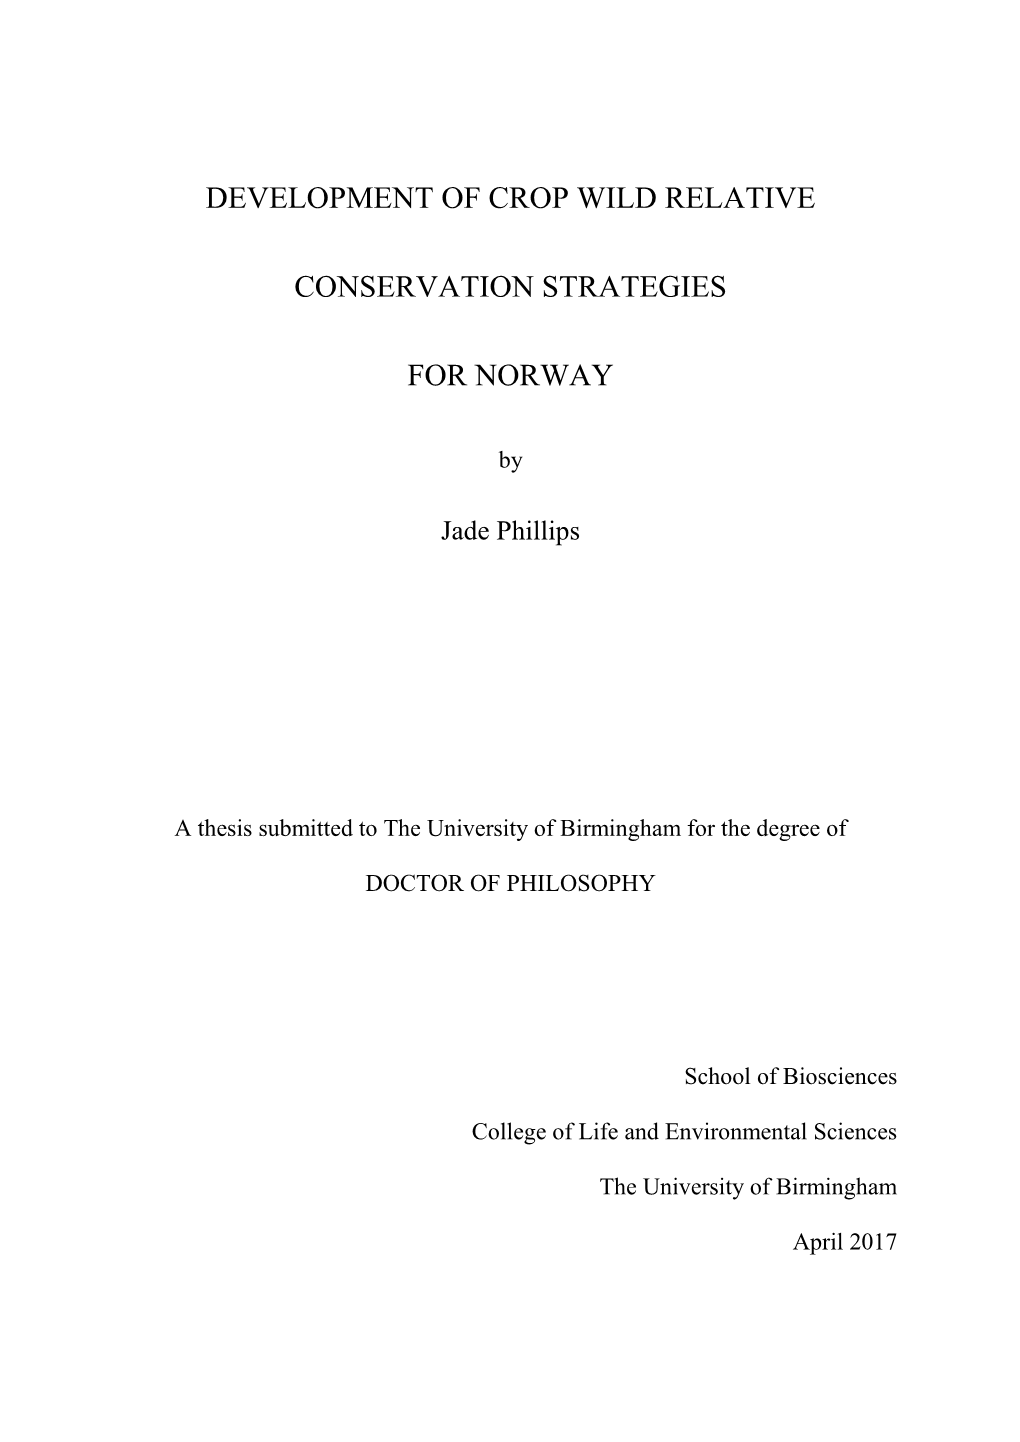 Development of Crop Wild Relative Conservation Strategies for Norway